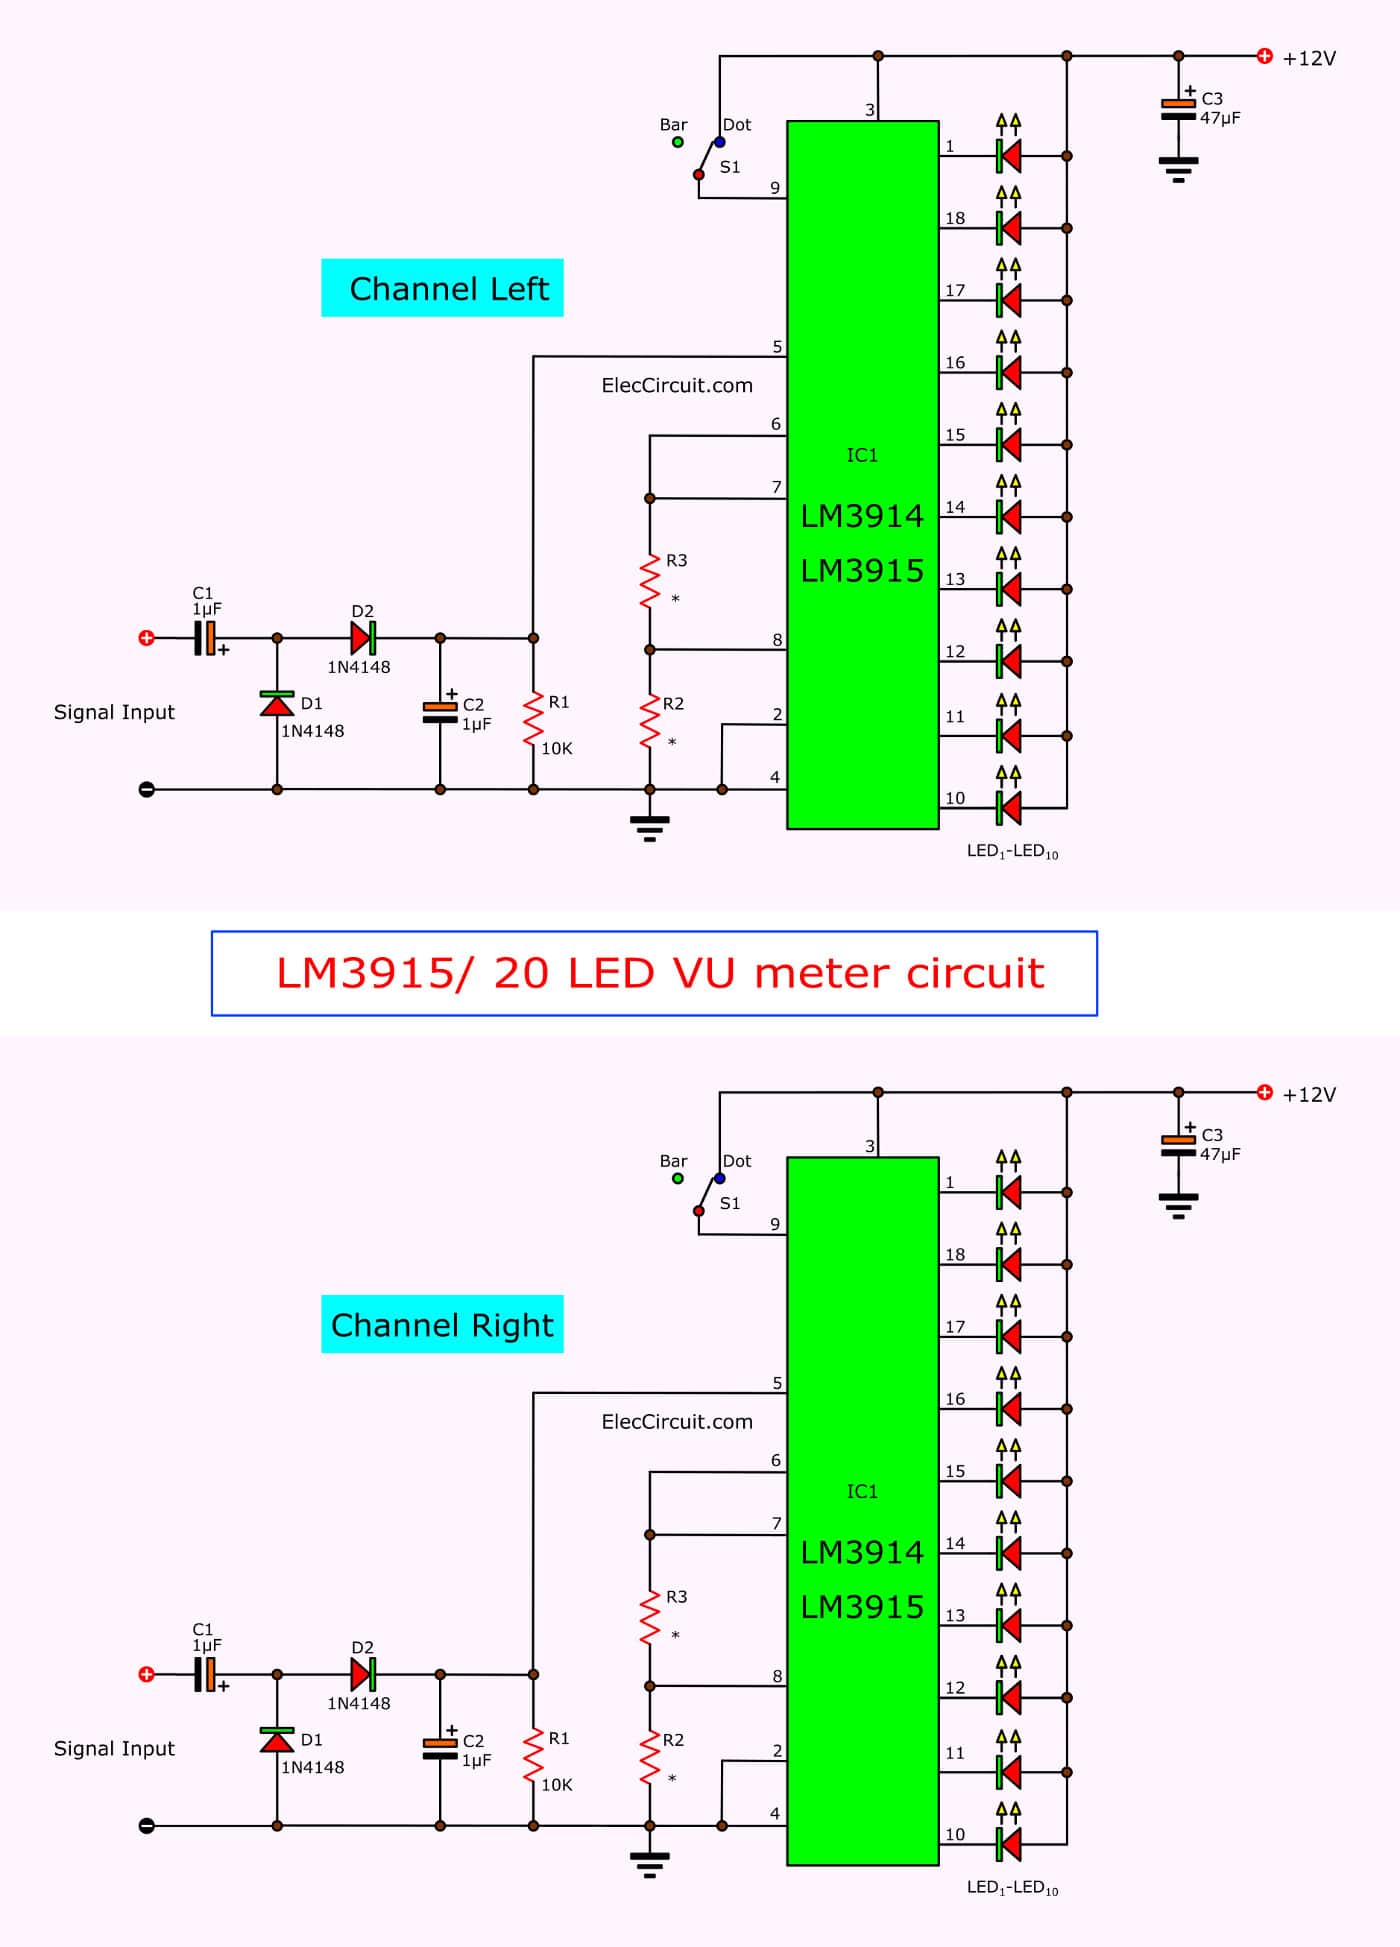 Peak Hold VU meter circuit- ElecCircuit.com